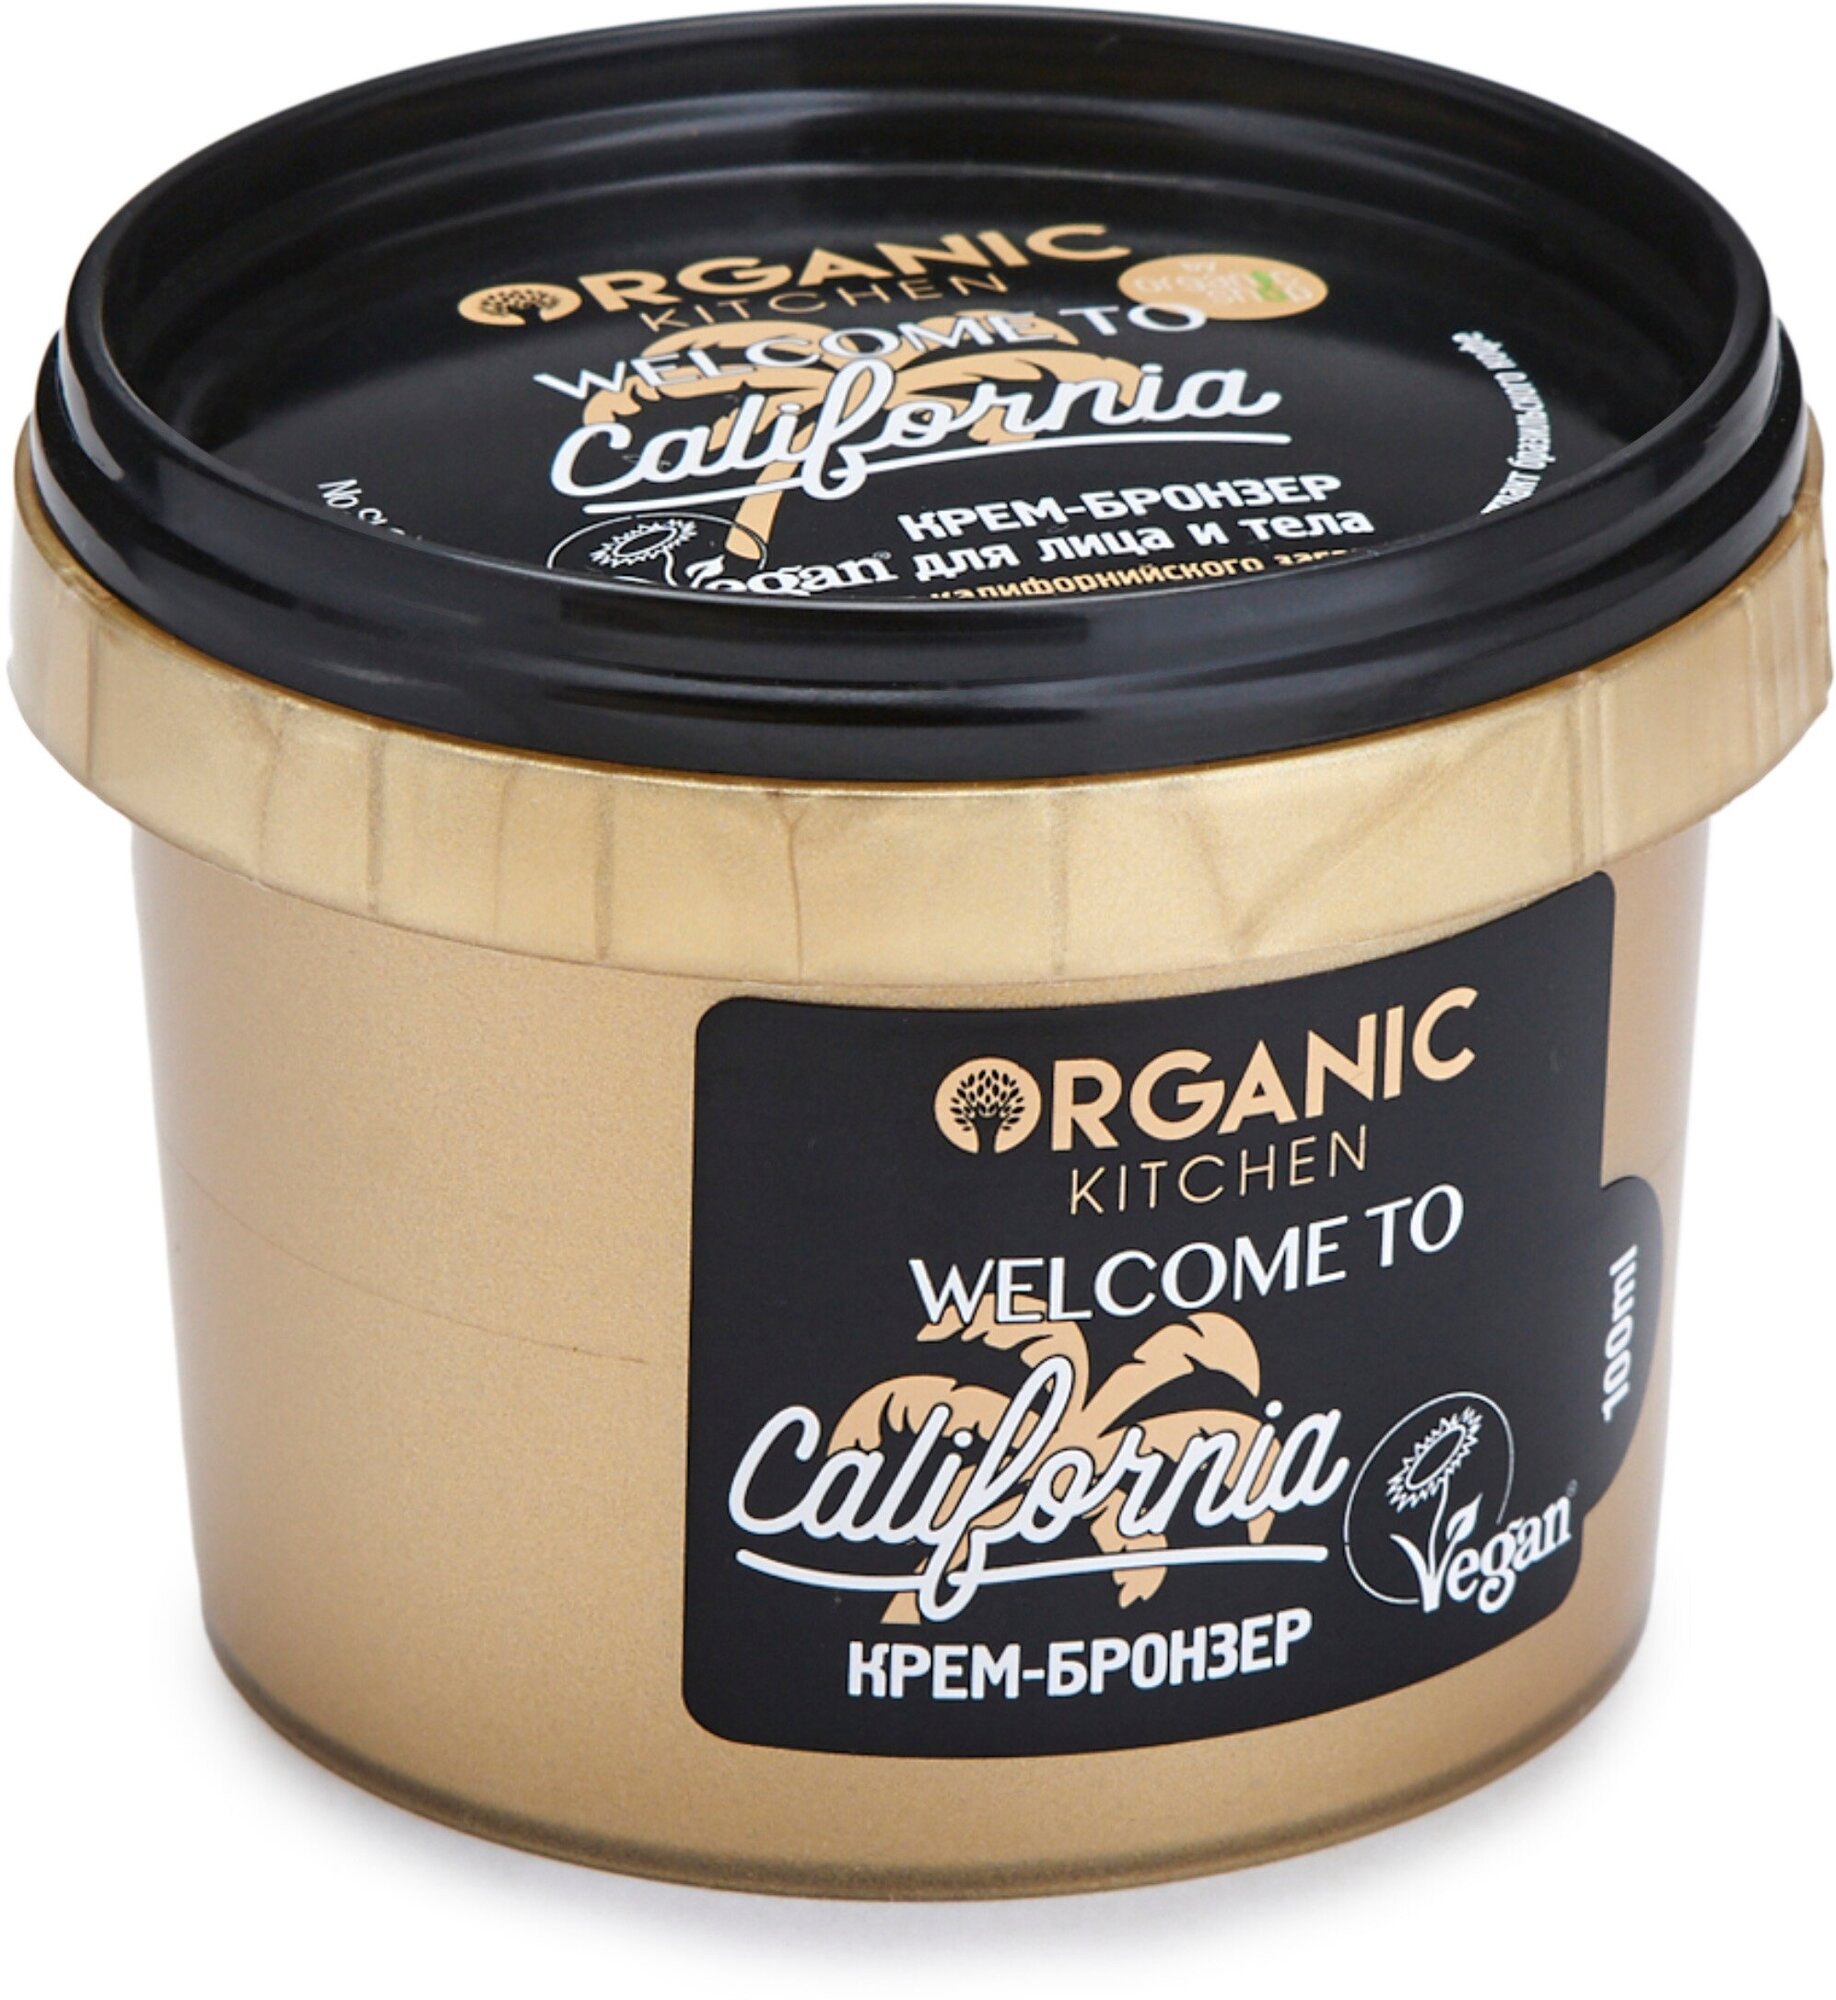 Крем-бронзер для лица и тела "Welcome to California" Organic Kitchen, 100 мл